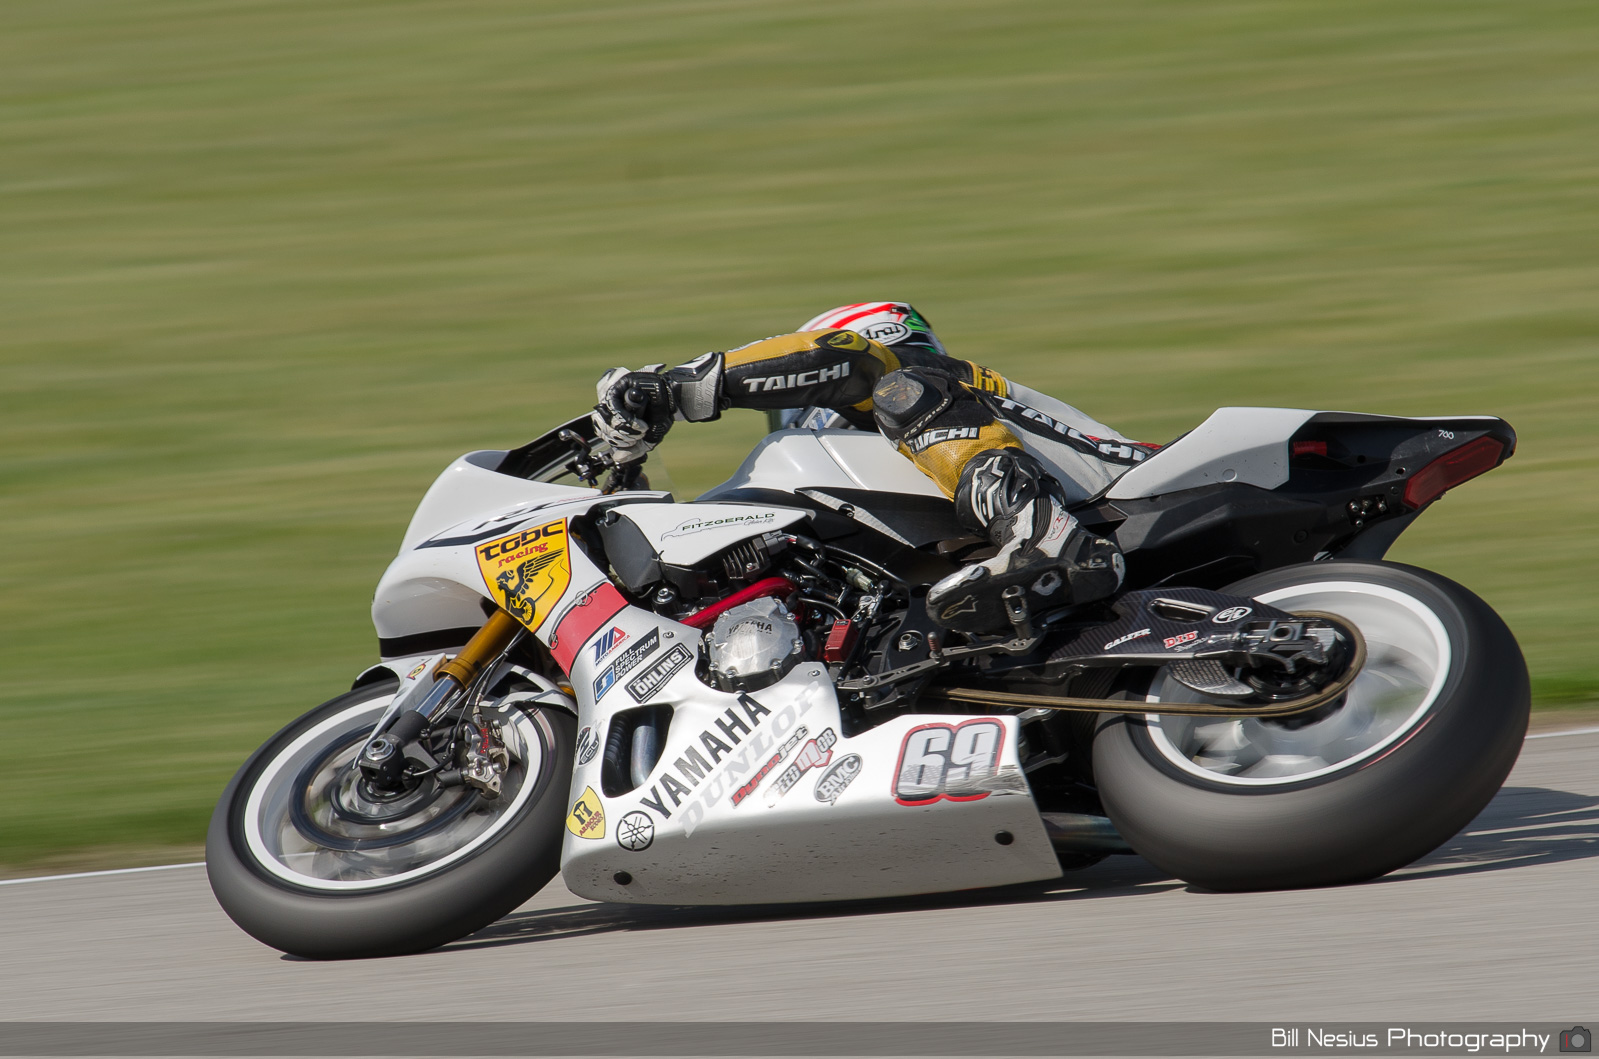 Danny Eslick on the #69 Yamaha YZR1 TOBC Racing / DSC_2821 / 4